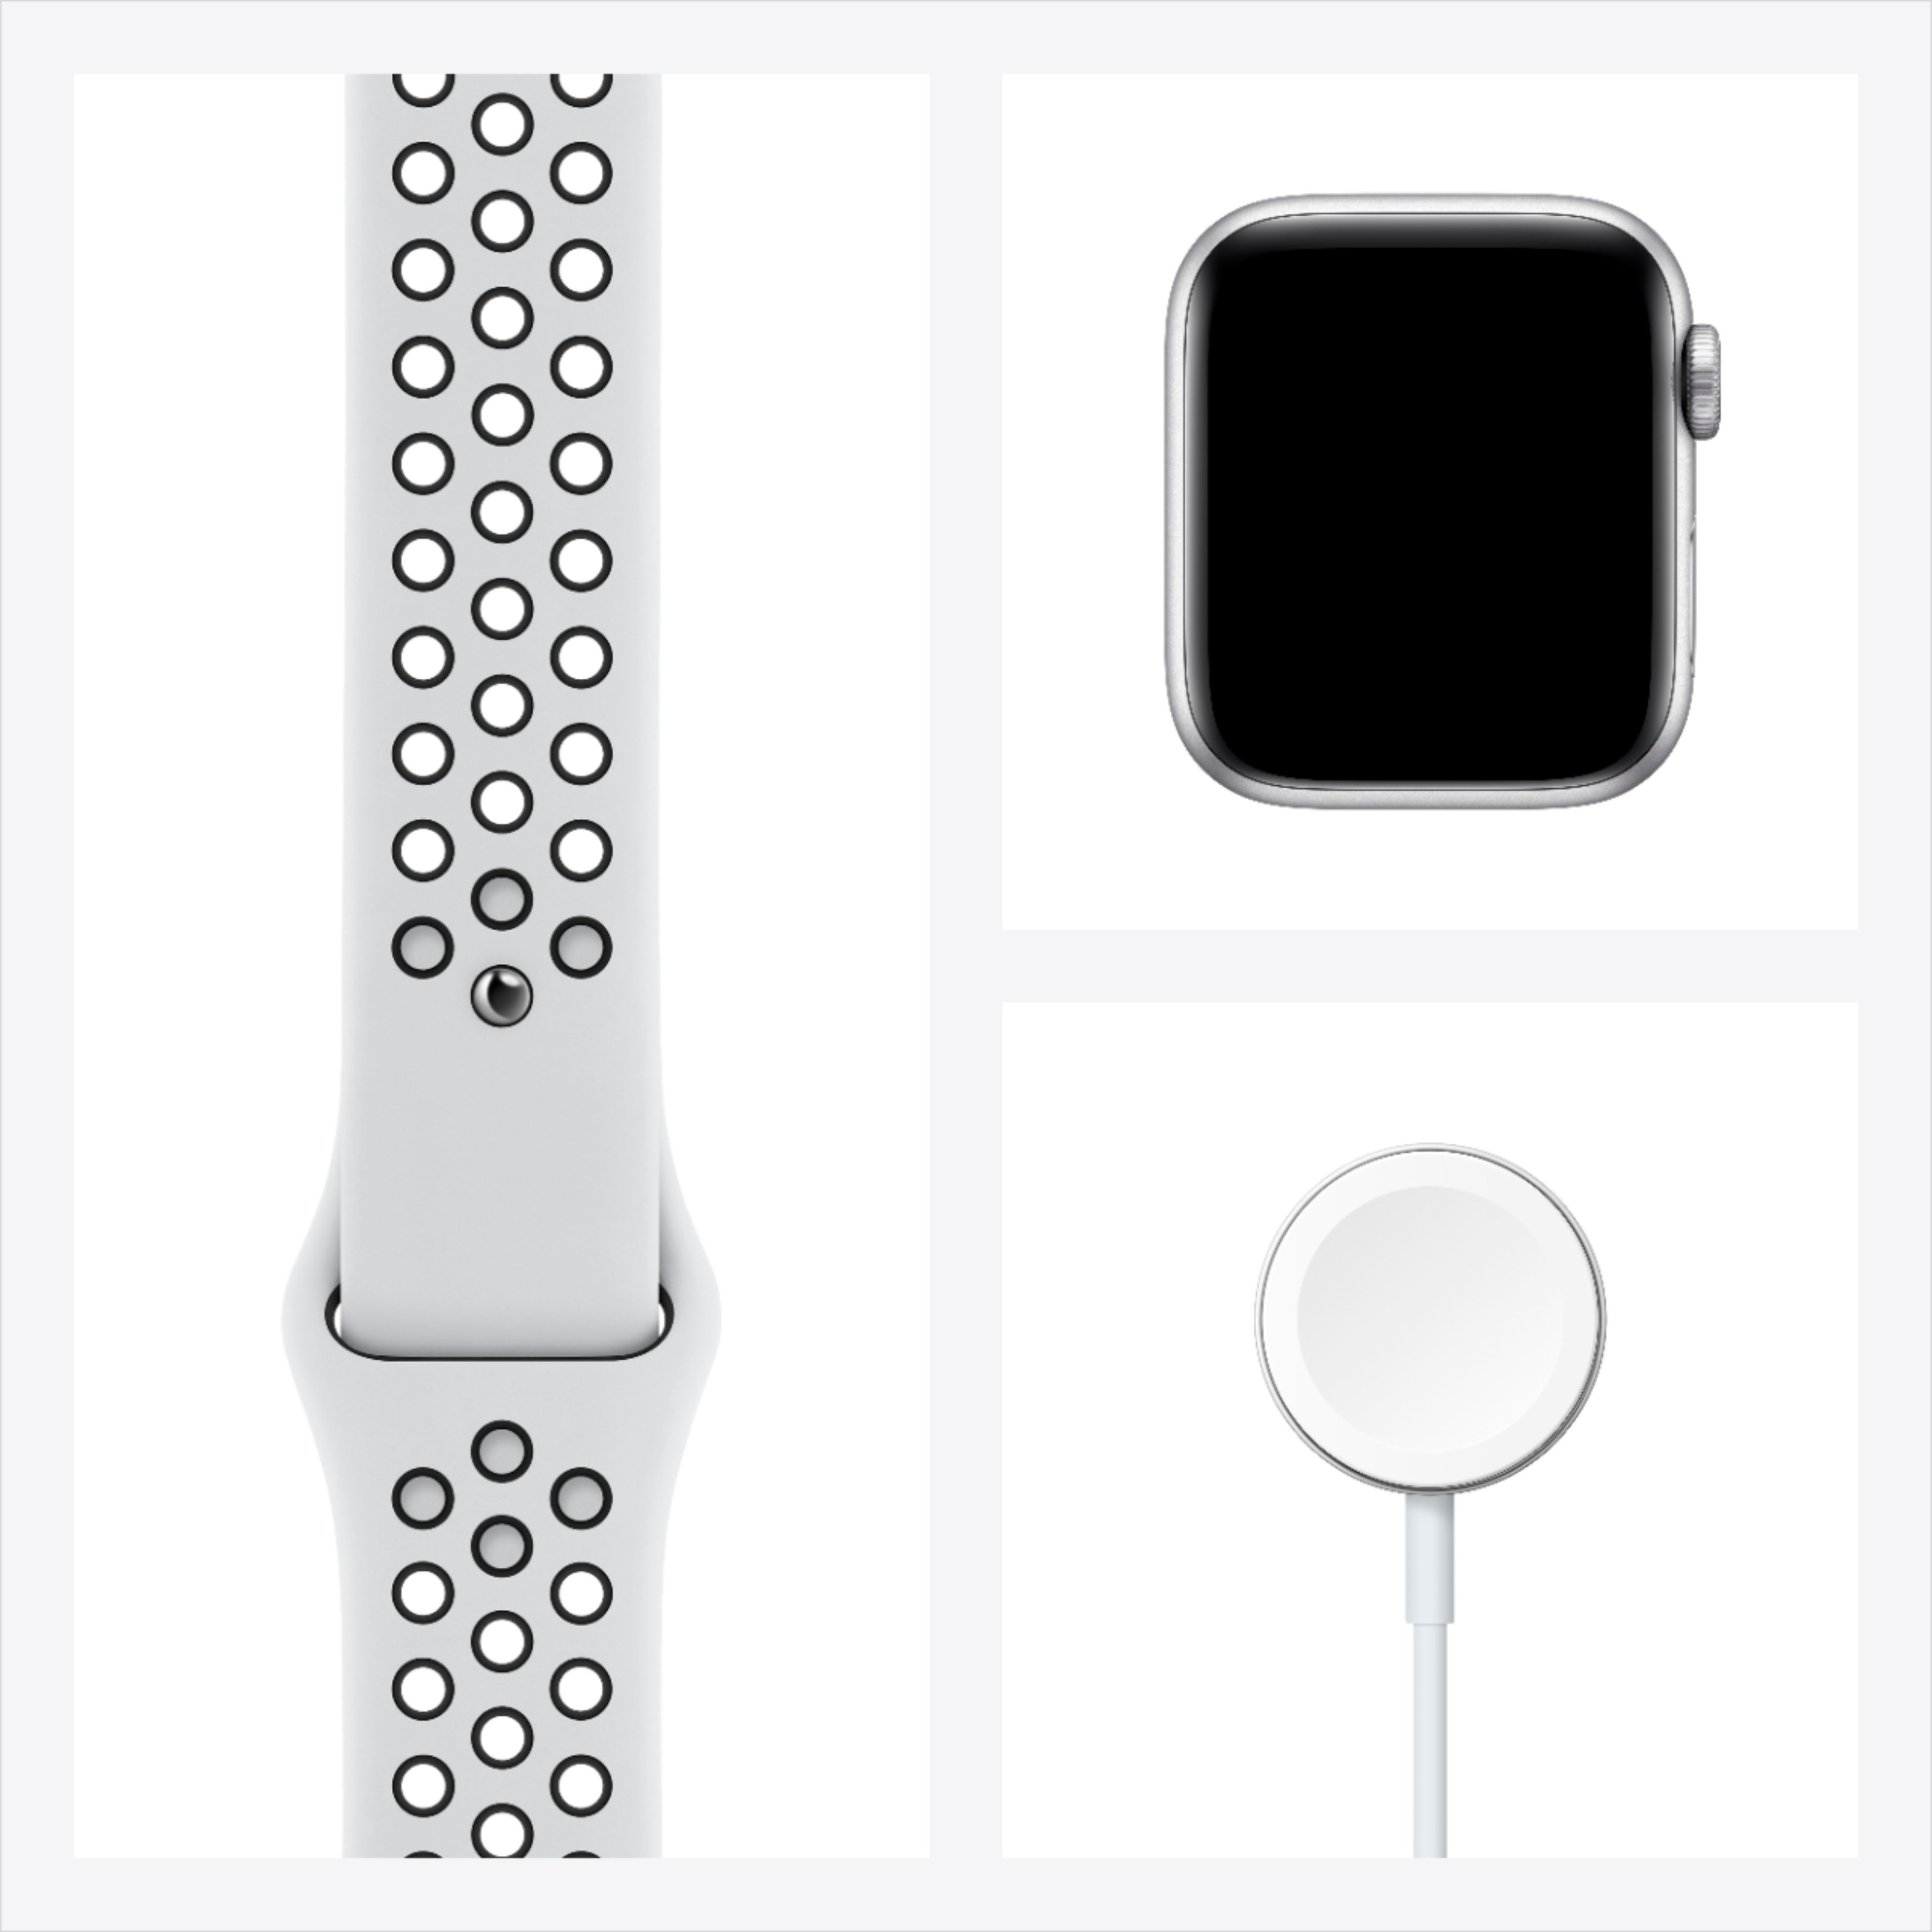 apple watch series 4 nike  40mm silver